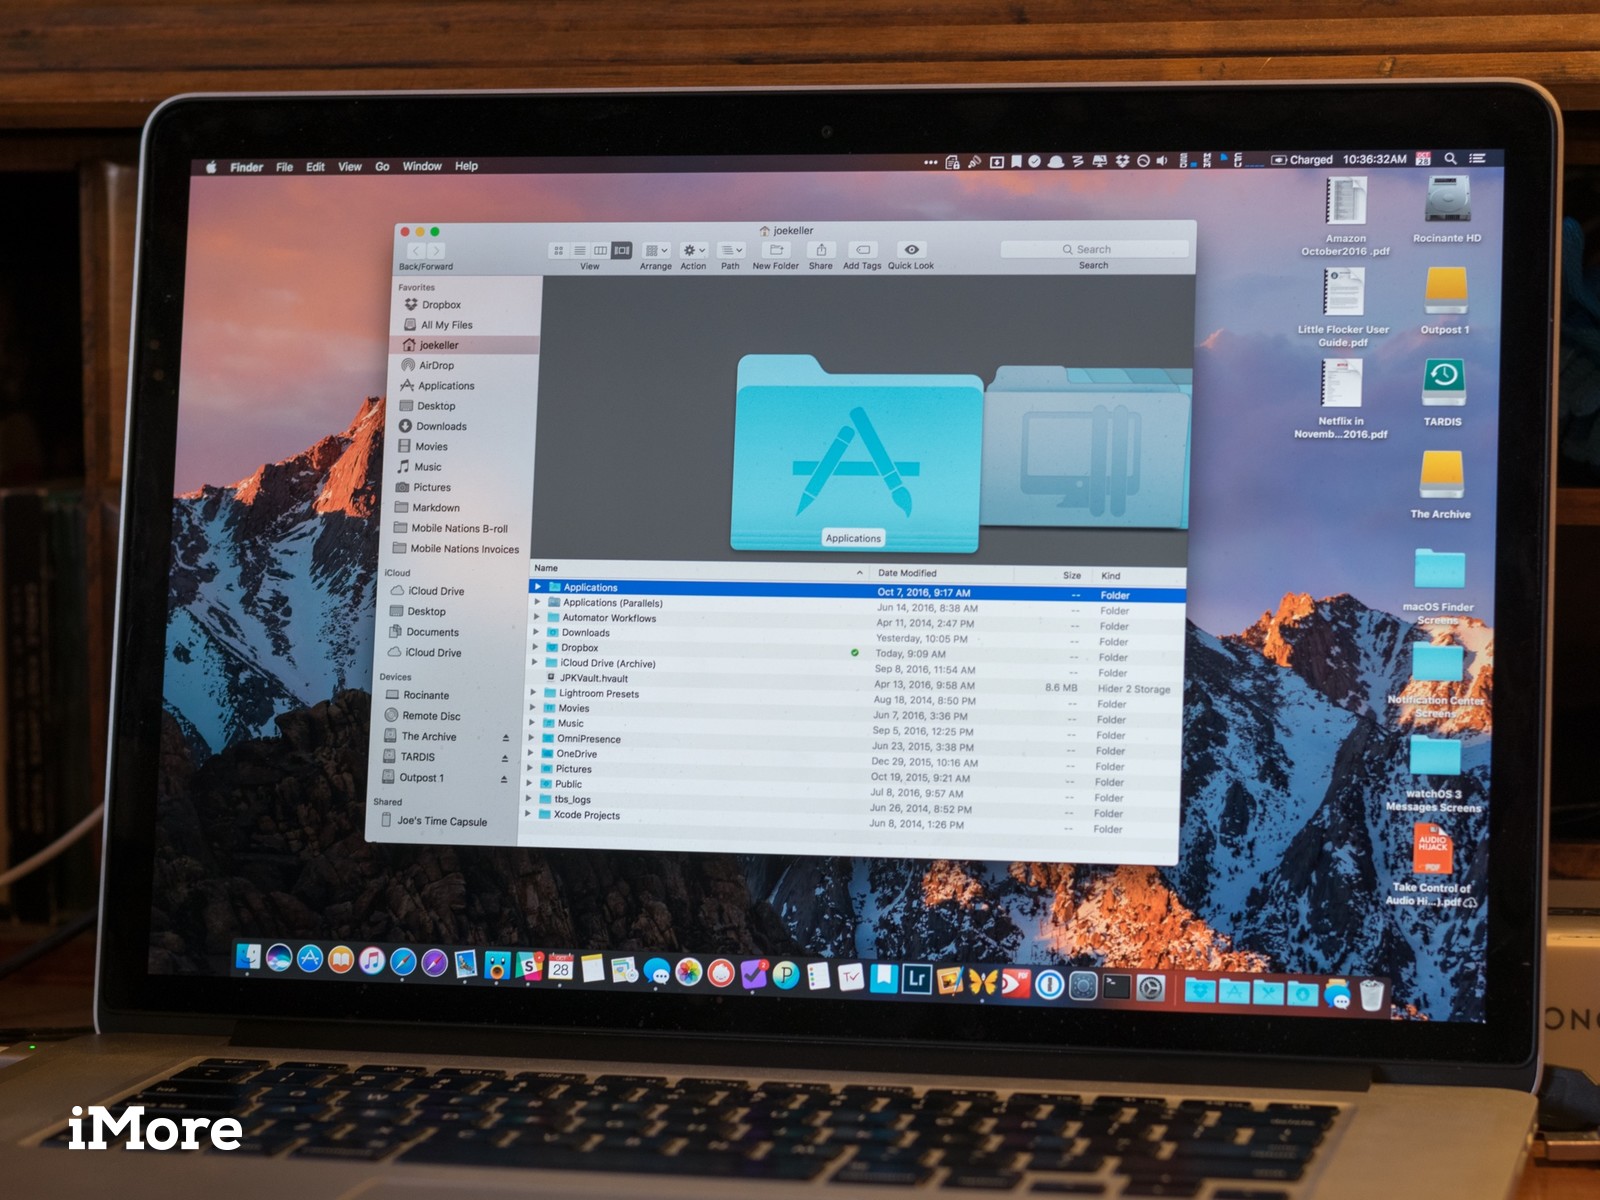 DesktopClock3D 1.92 download the new version for mac